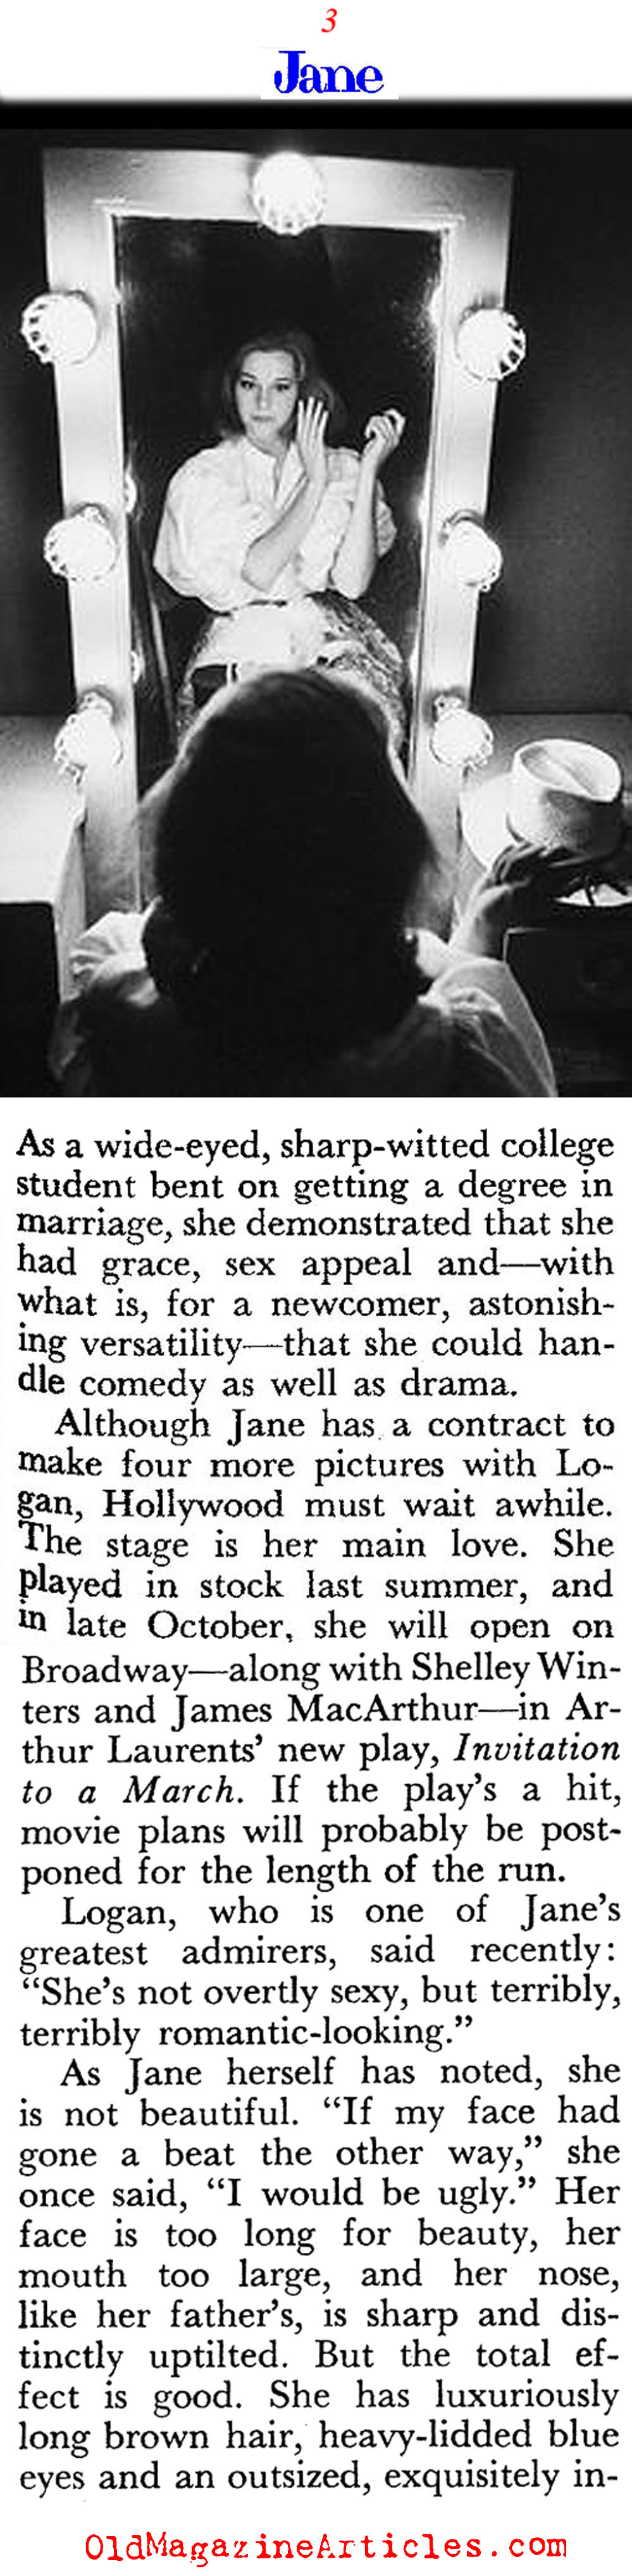 Jane Fonda (Pageant Magazine, 1960)